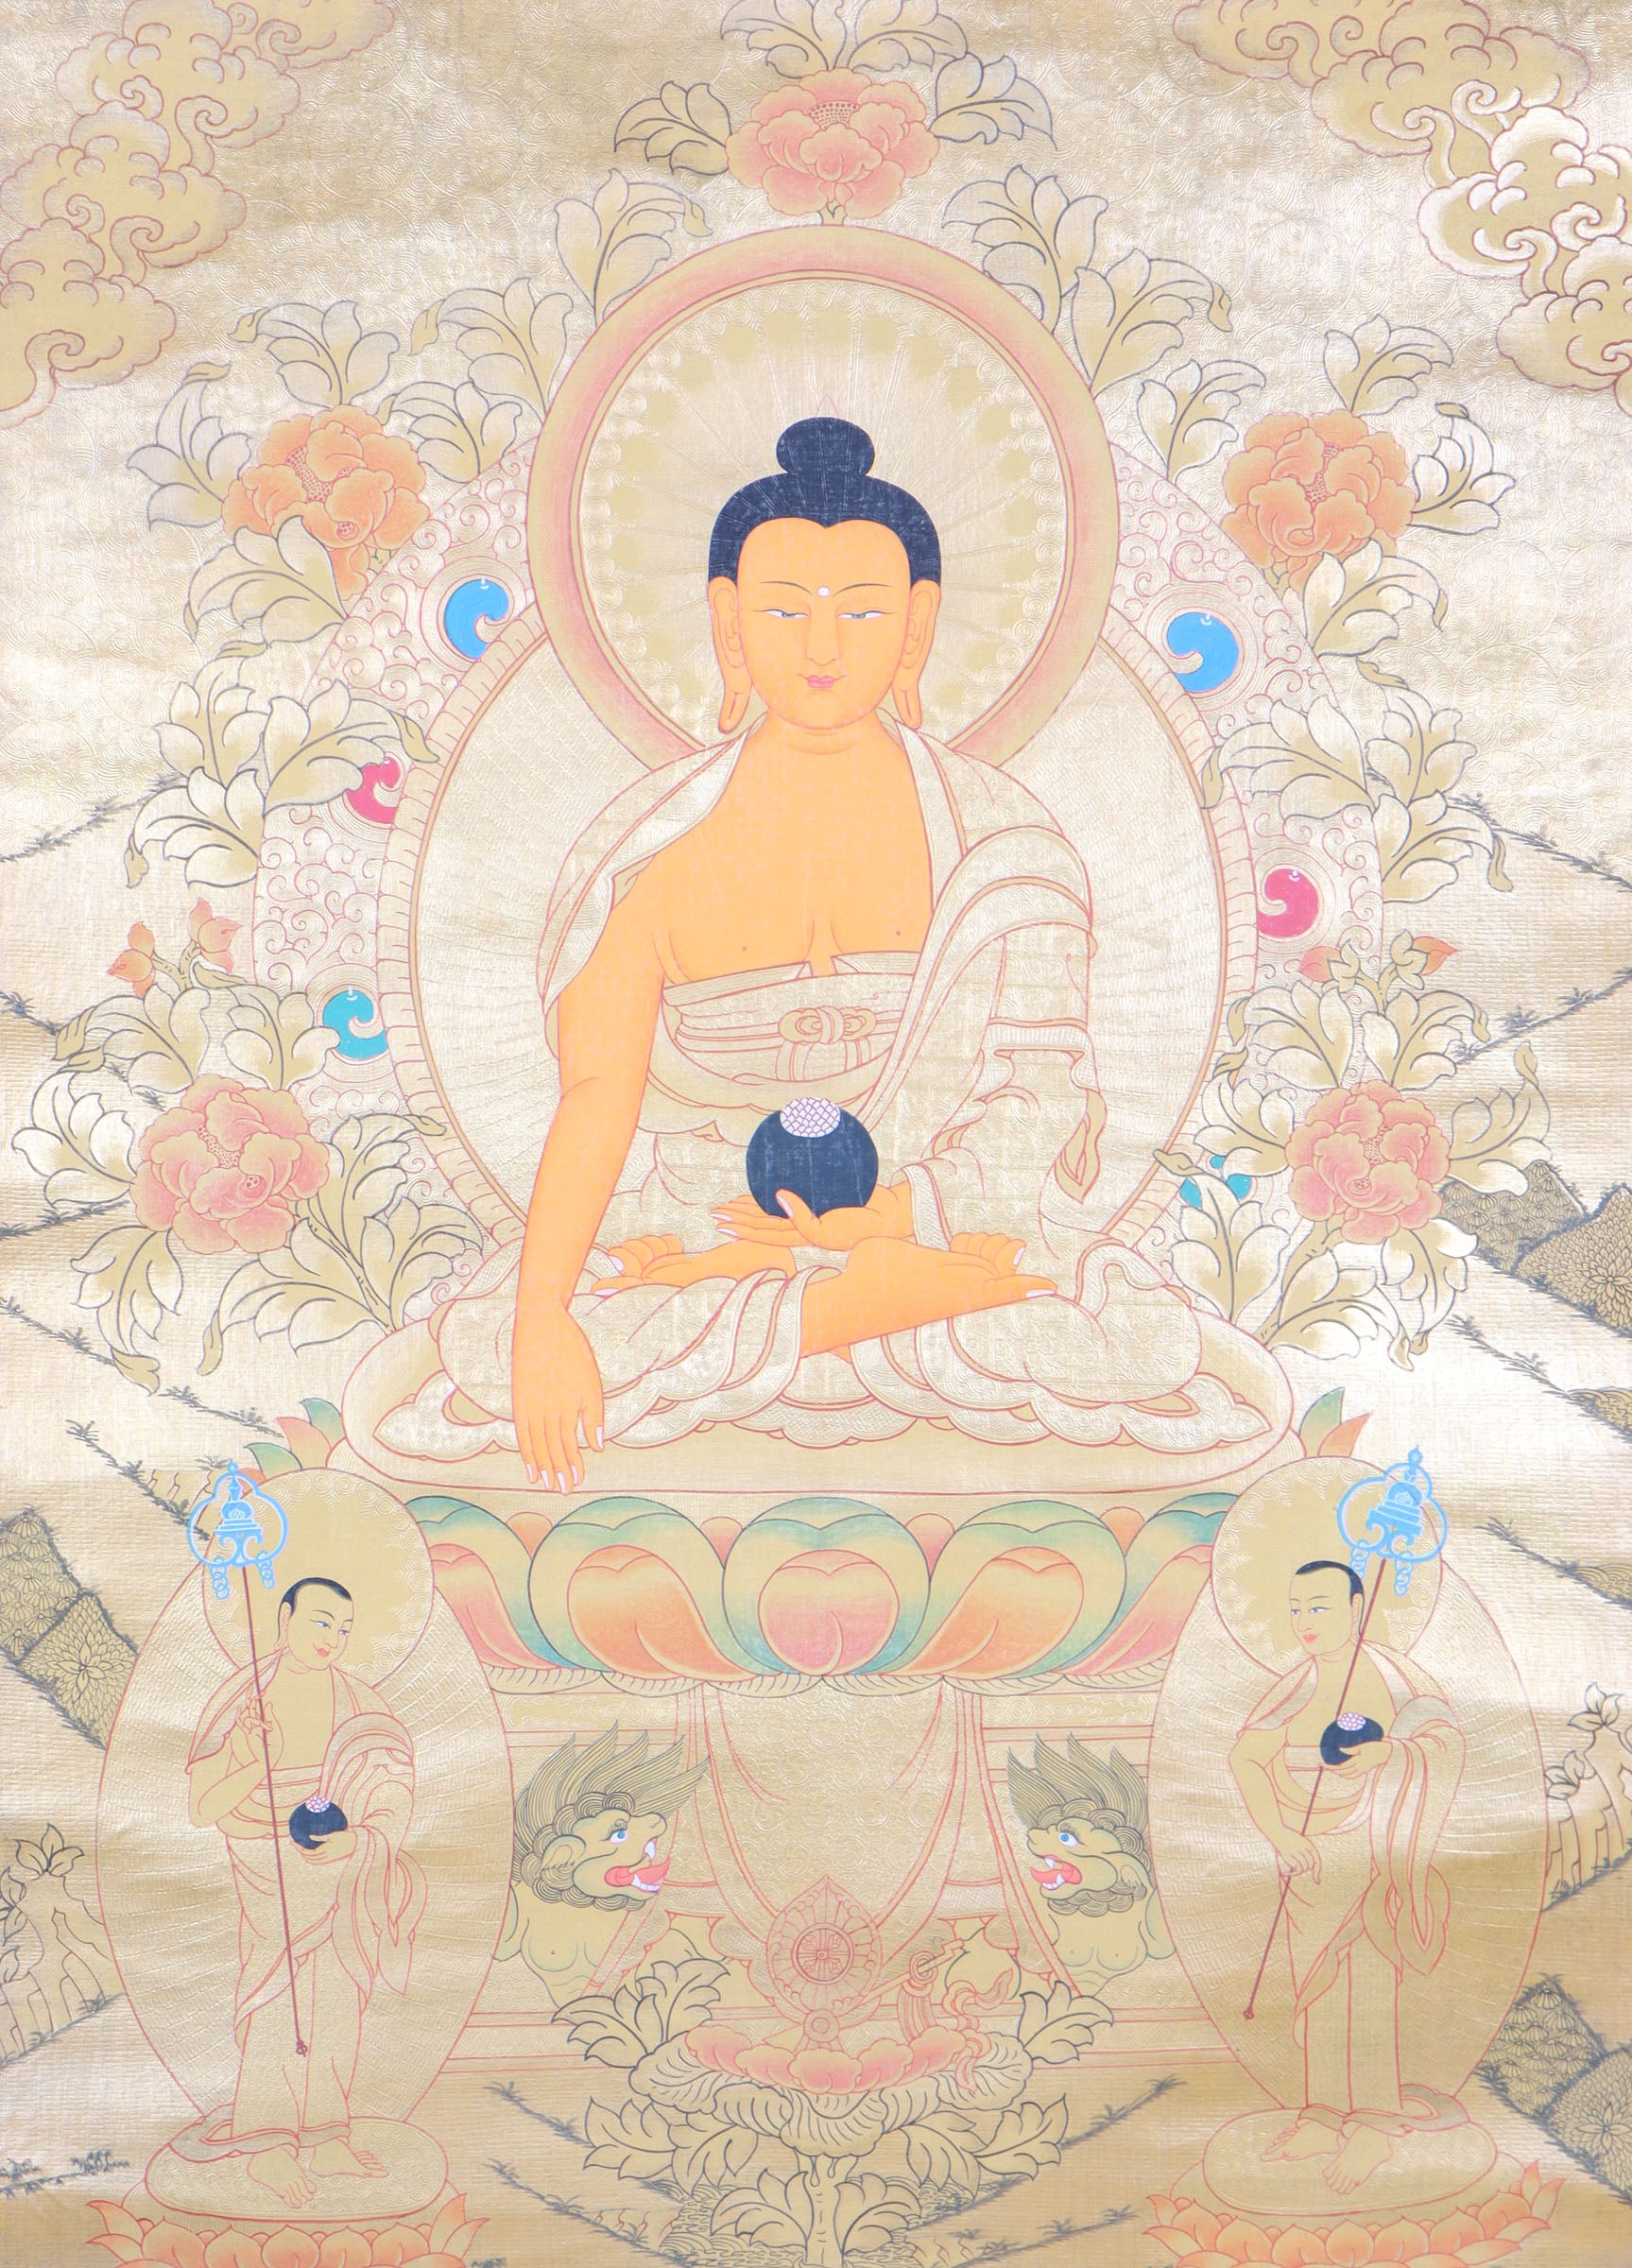 Shakyamuni Buddha Thangka Painting for buddhist teaching.